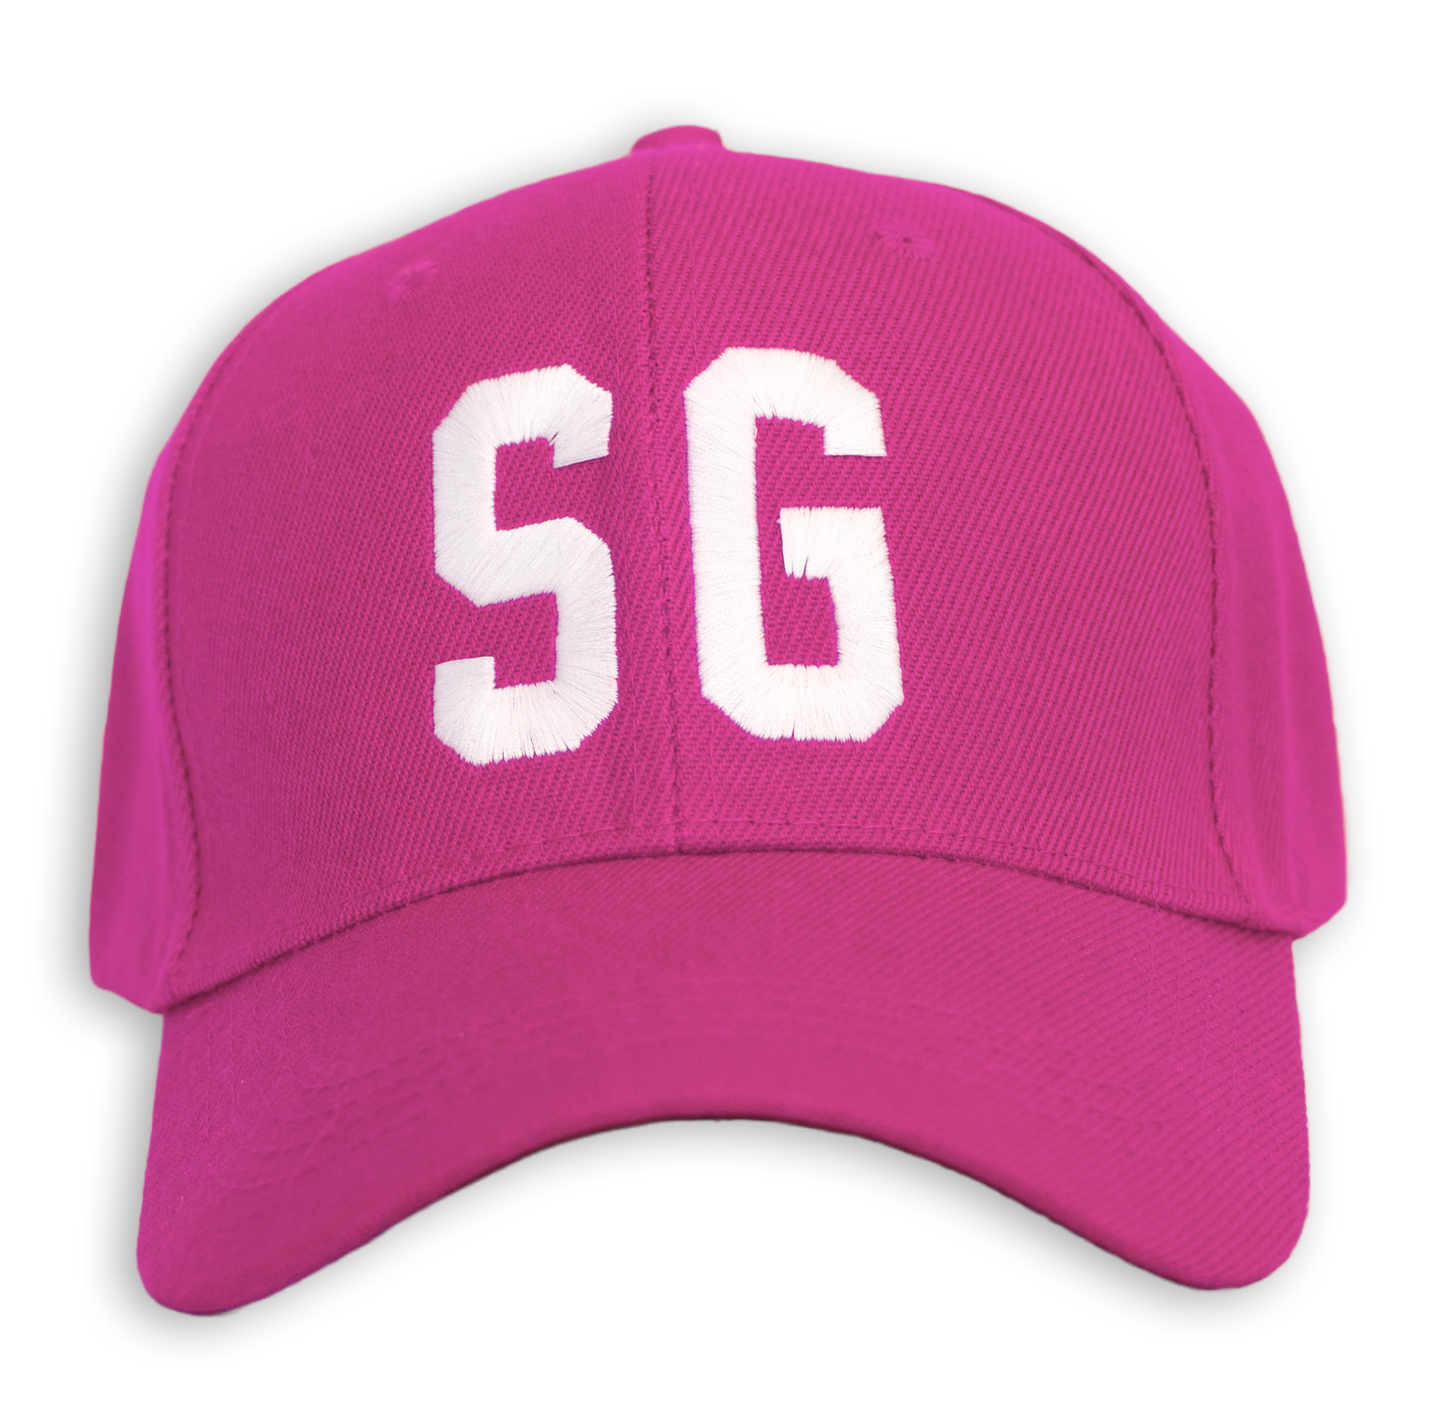 SG Cap - Powerful Pink (Dark)